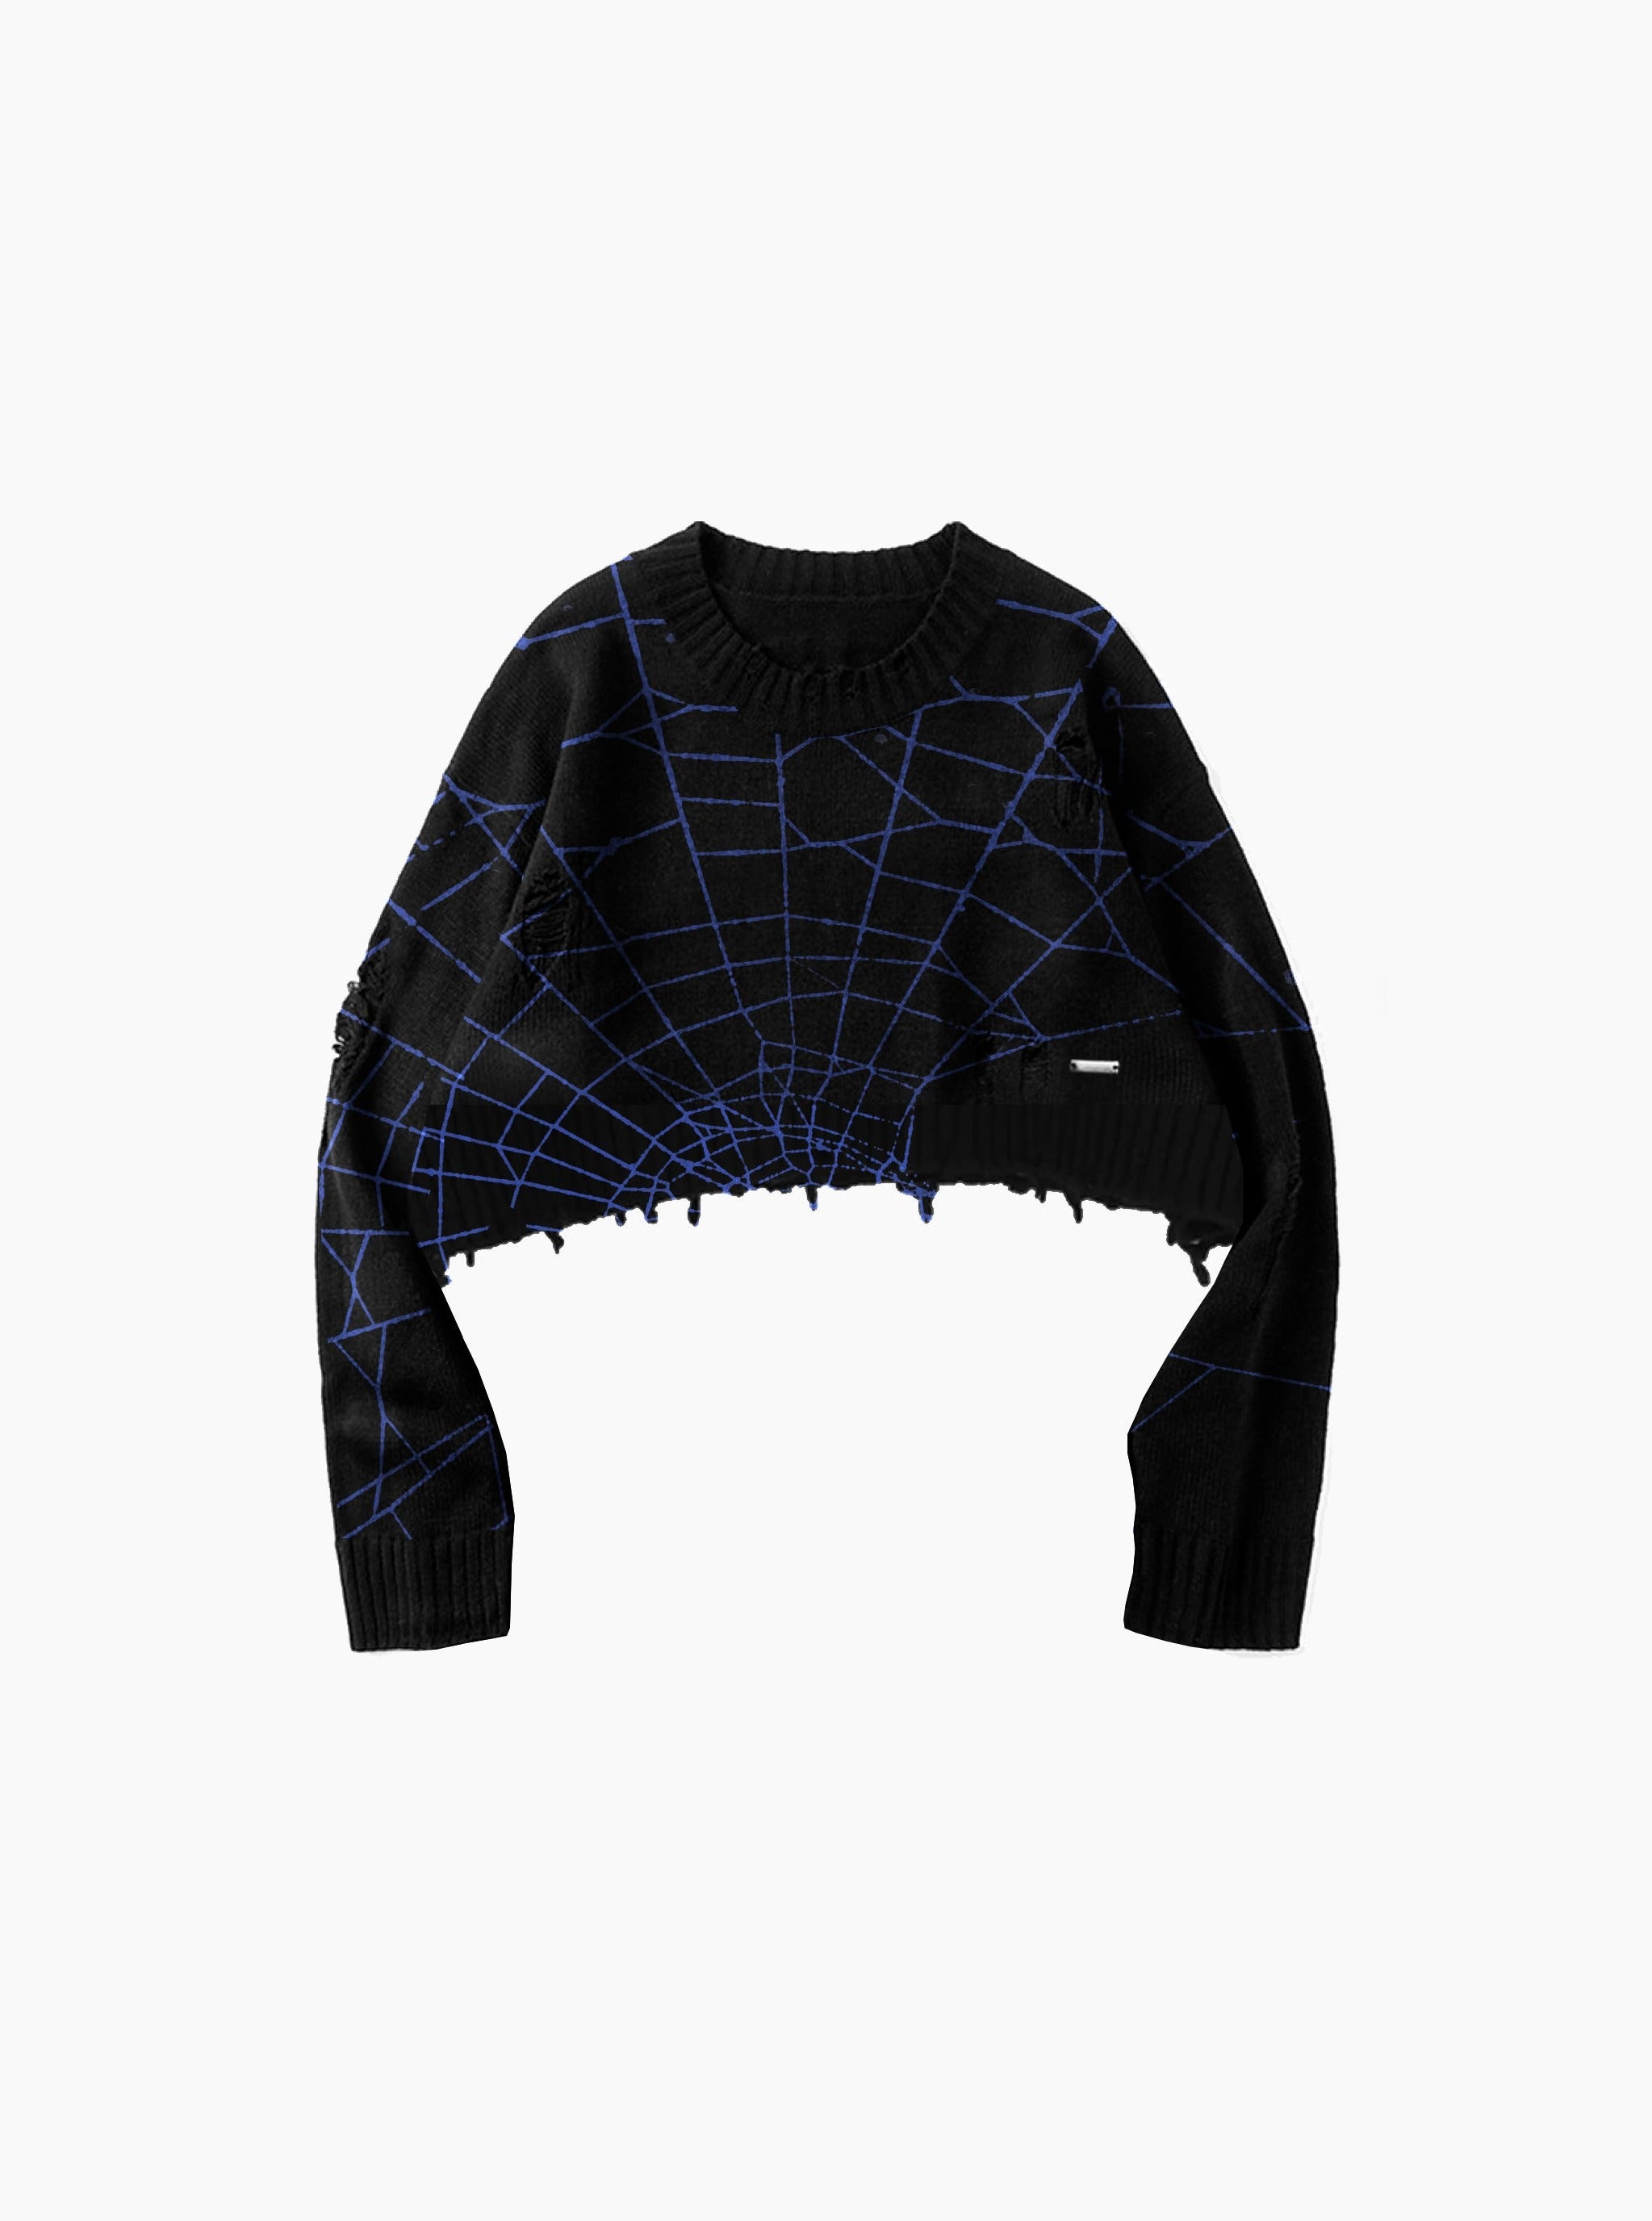 Tong et. Al Women's Dark Web Distressed Knit Sweater